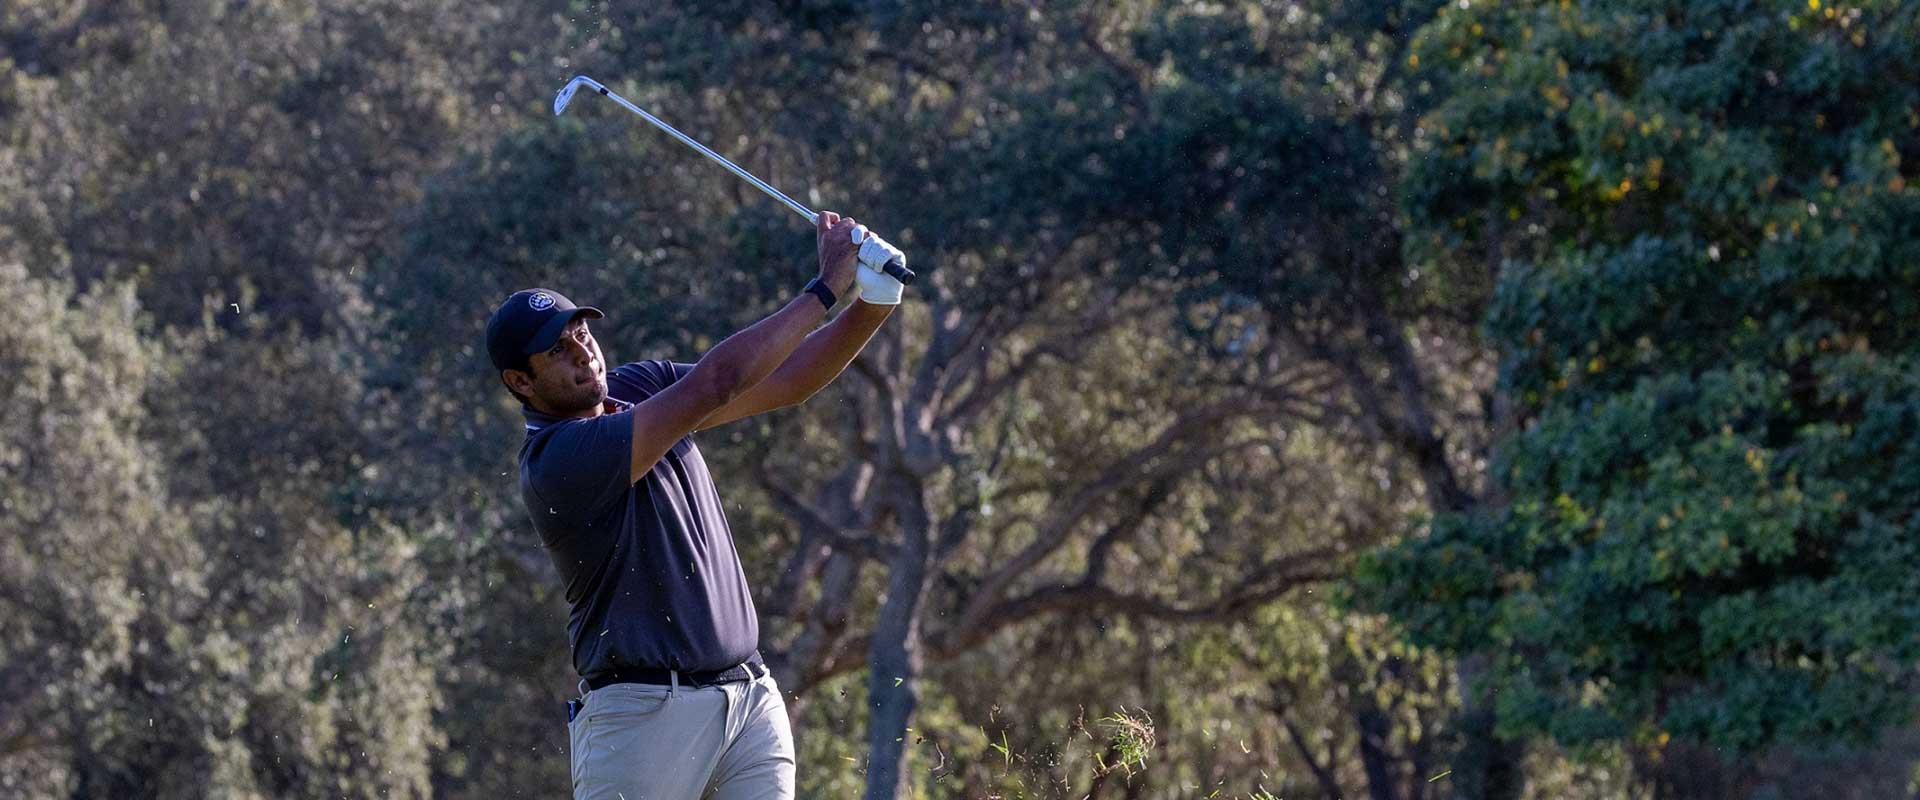 Golf gaining momentum across the Arab world